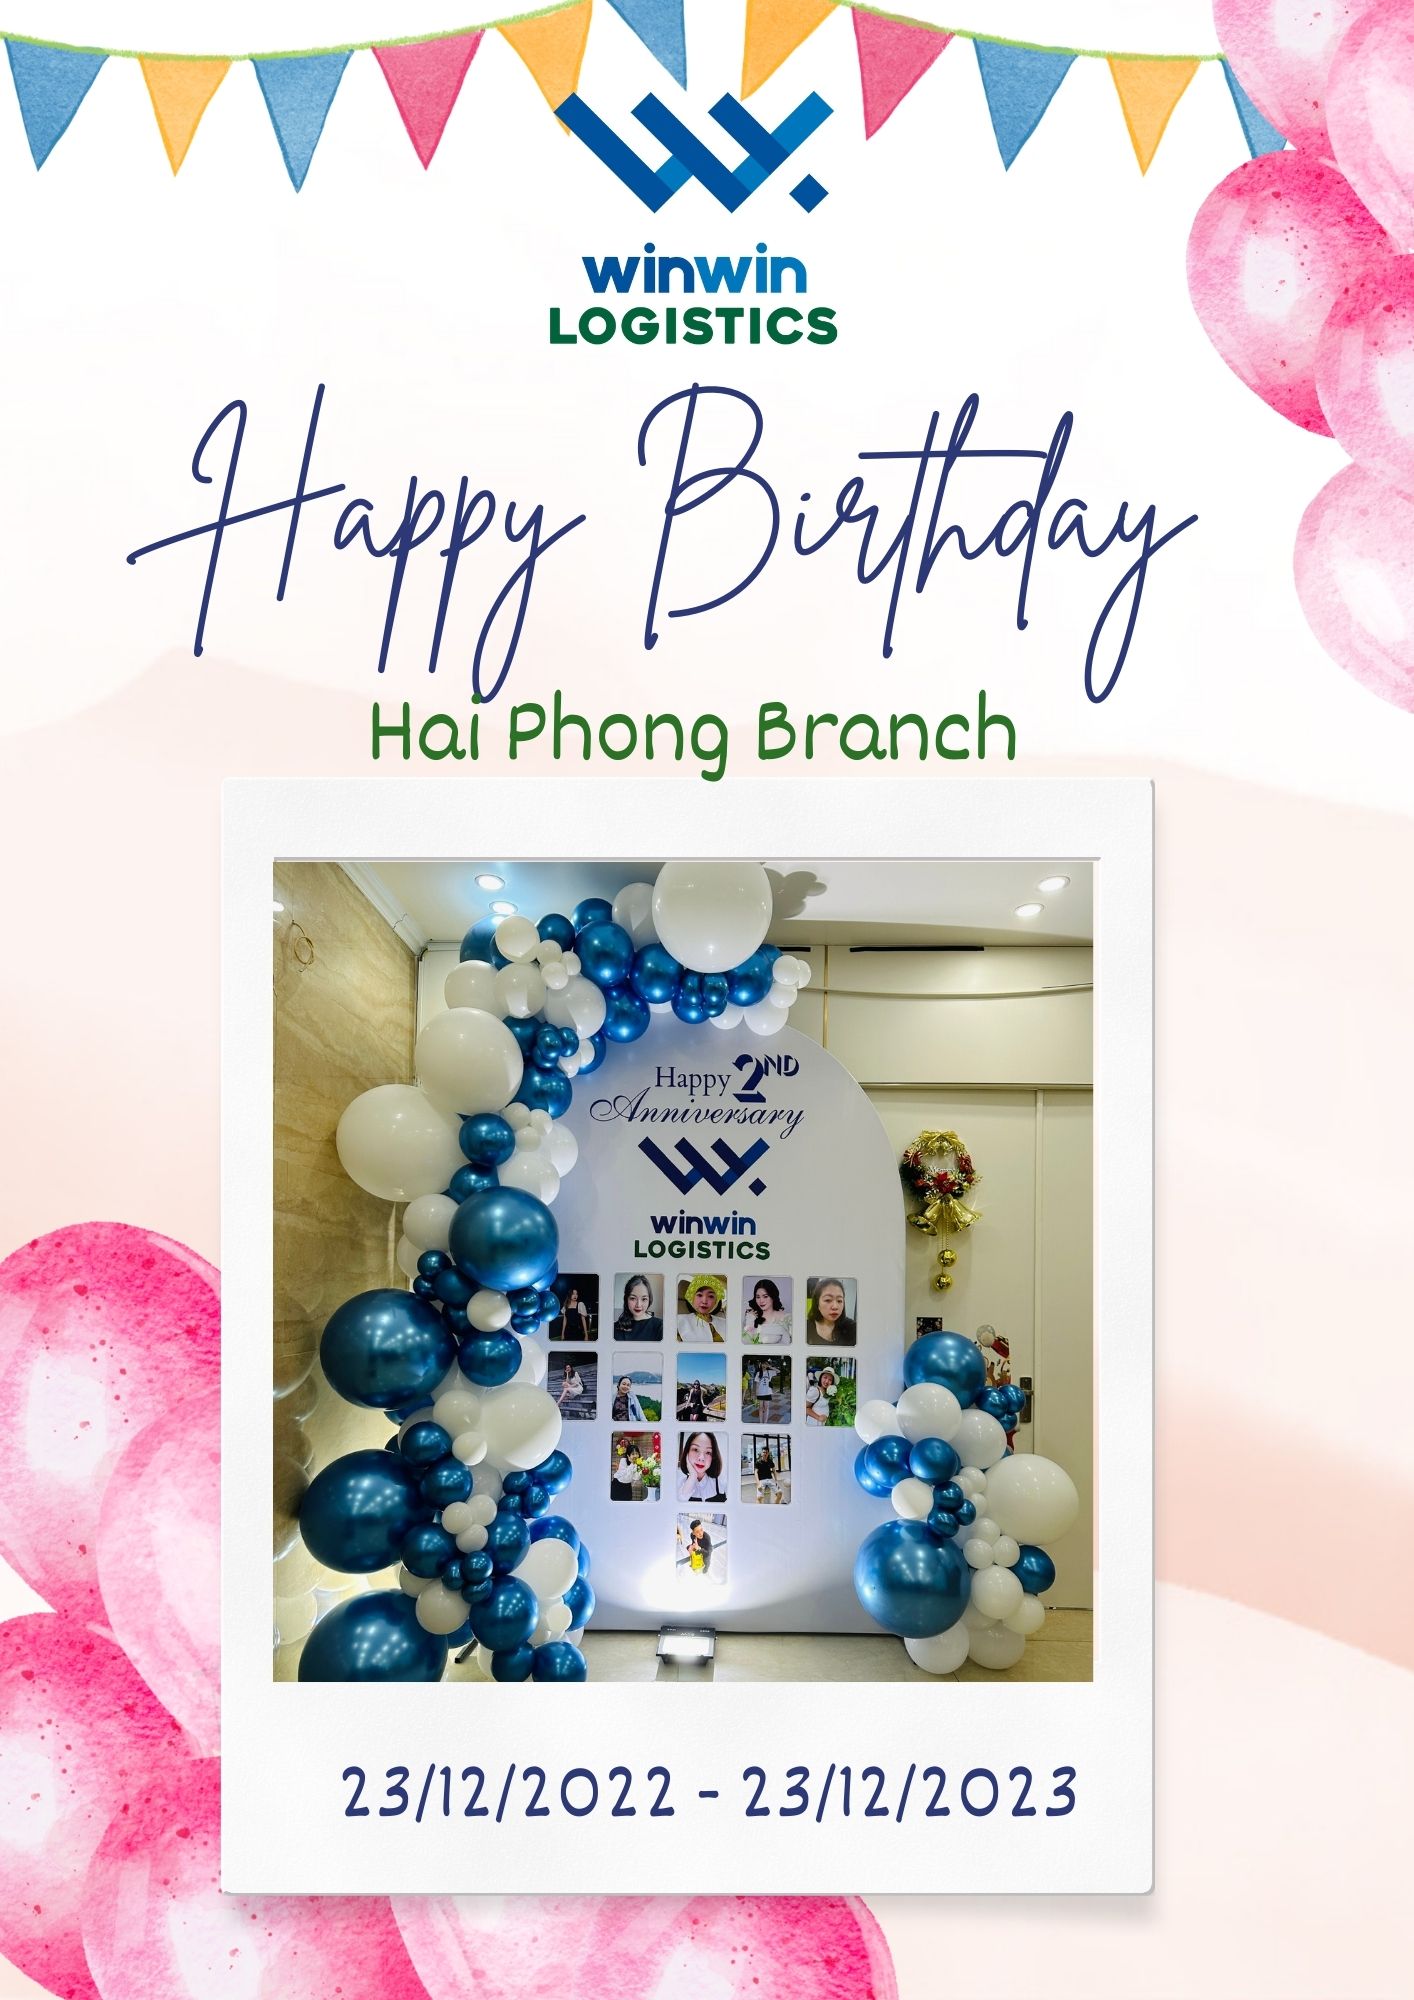 HAPPY BIRTHDAY HAI PHONG BRANCH